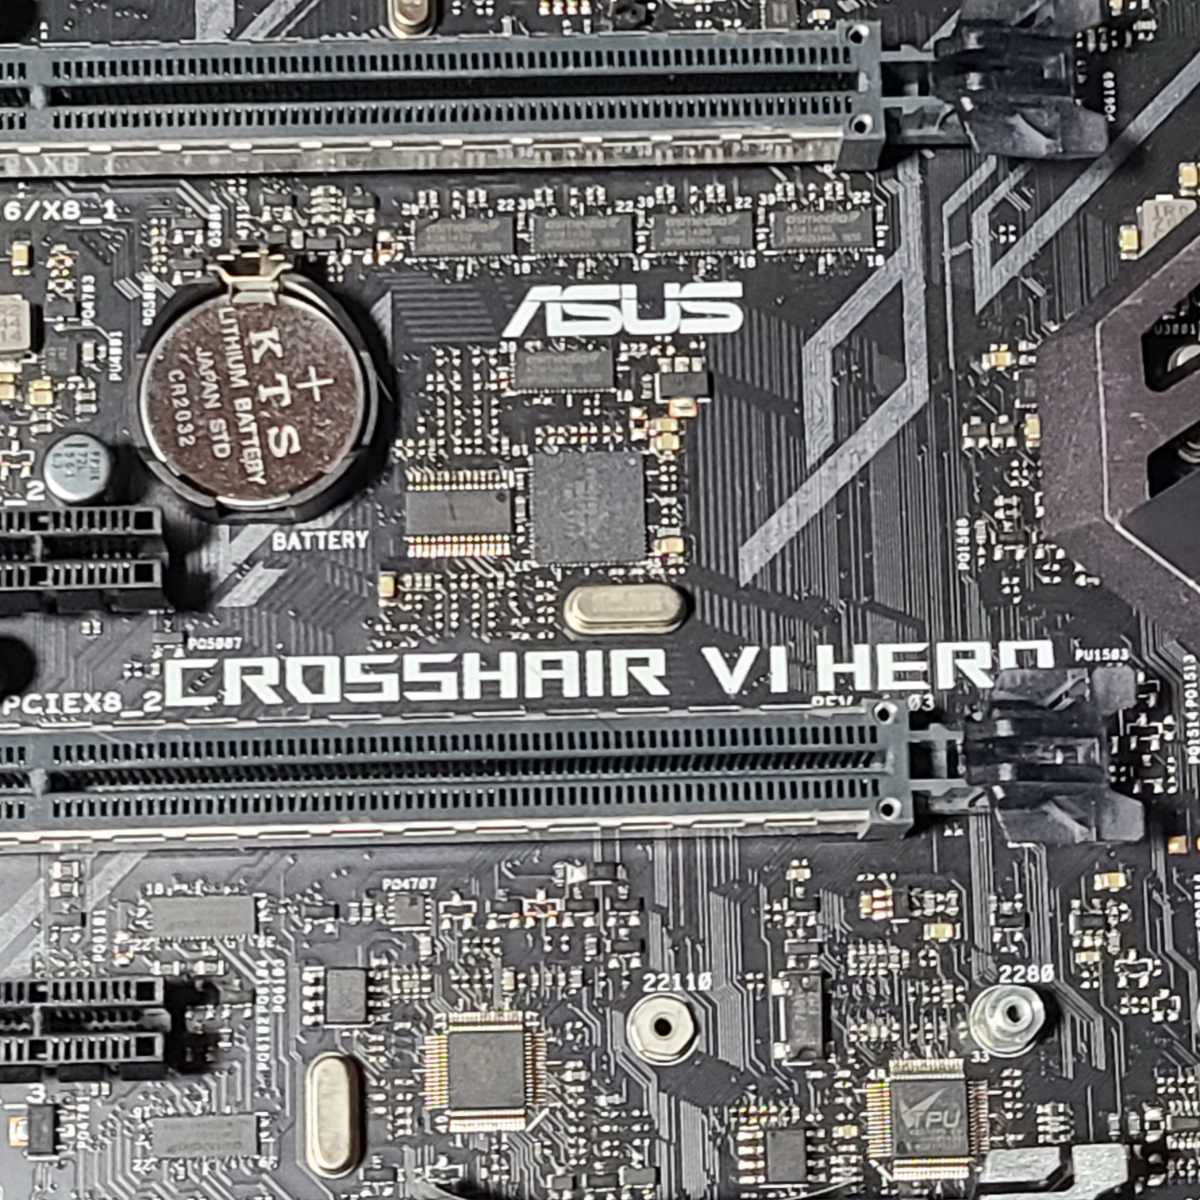 ASUS X370 ROG CROSSHAIR VI HERO IOパネル付属 Socket AM4 ATXマザーボード  RYZEN5000シリーズ対応 最新Bios 動作確認済 PCパーツ